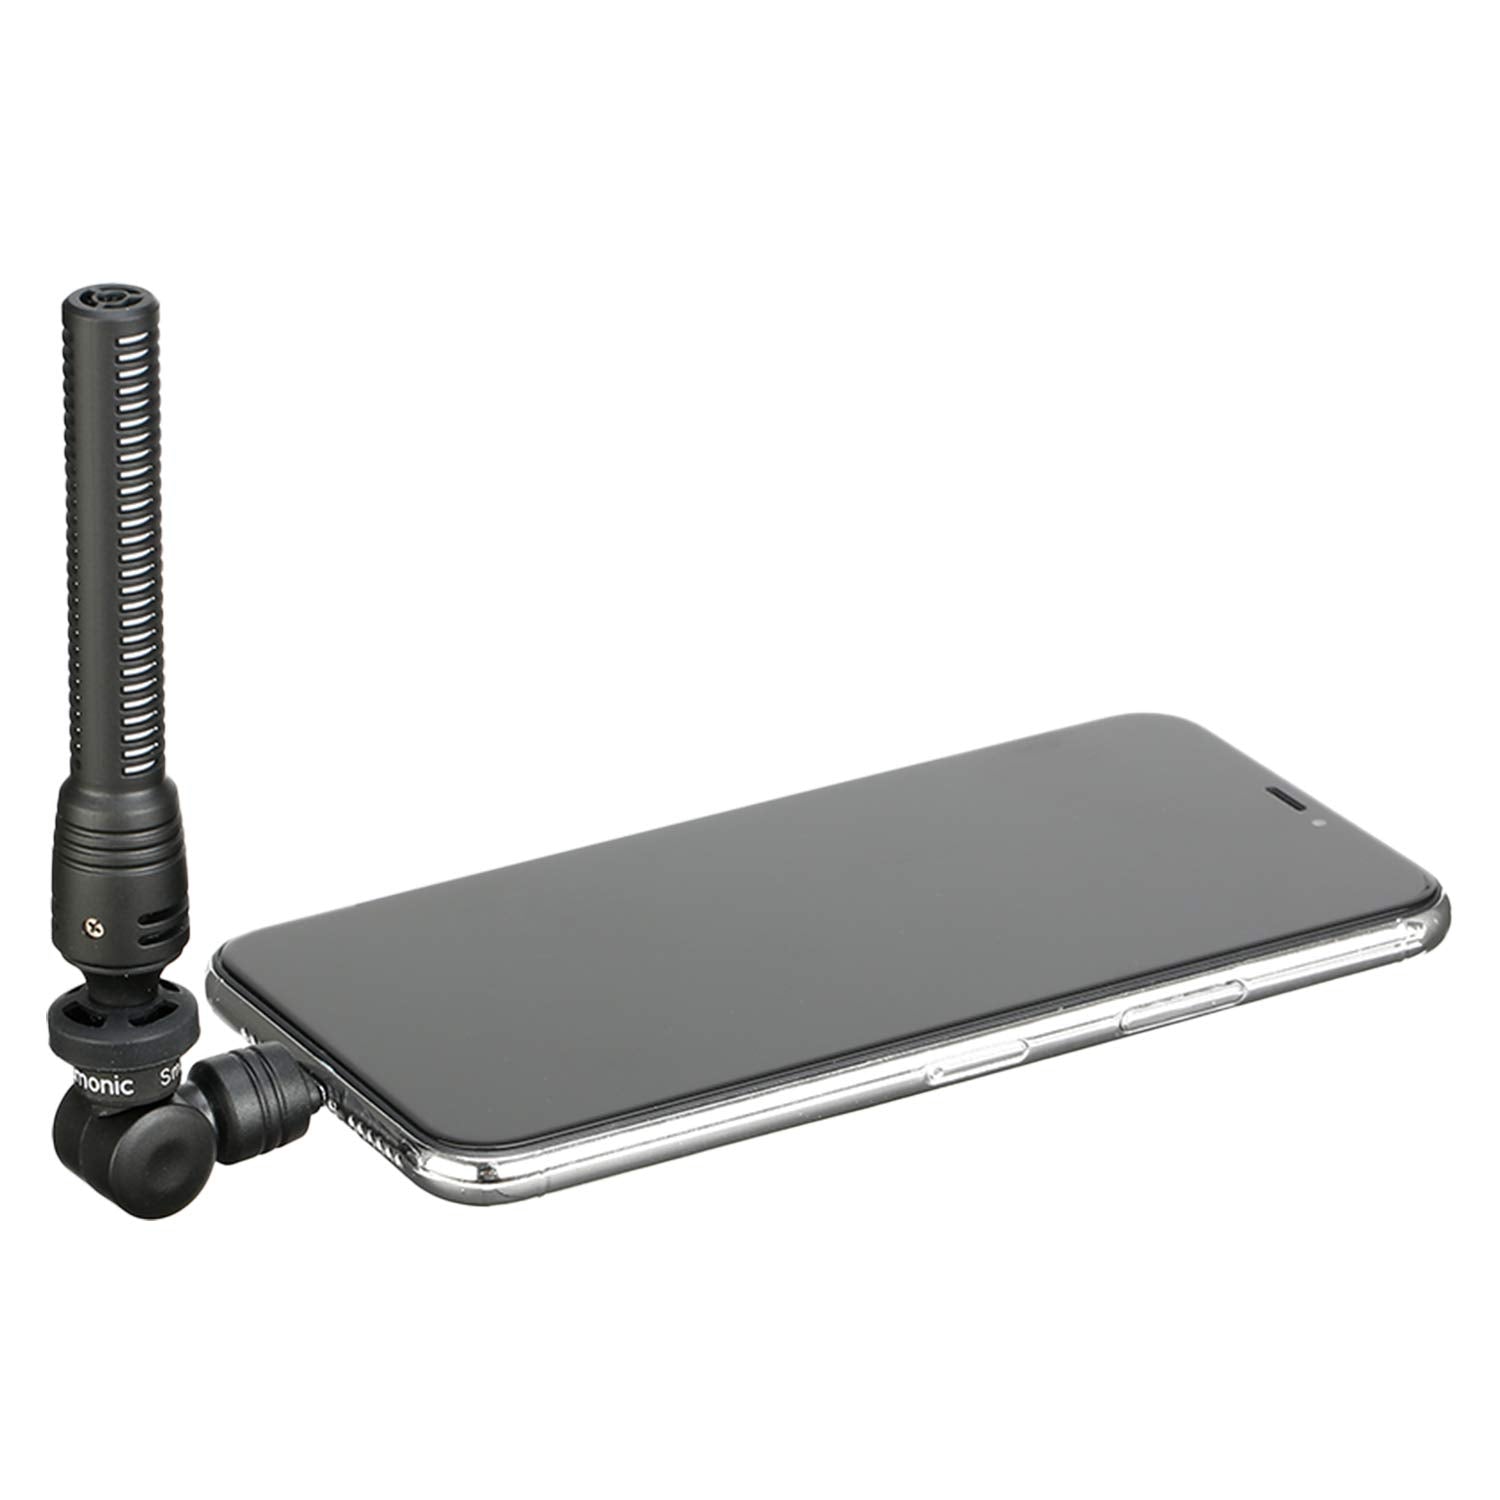 Saramonic Unidirectional Plug&Play Microphone for IOS Device Smartphone Tablet Vlog Poadcast Video Recording